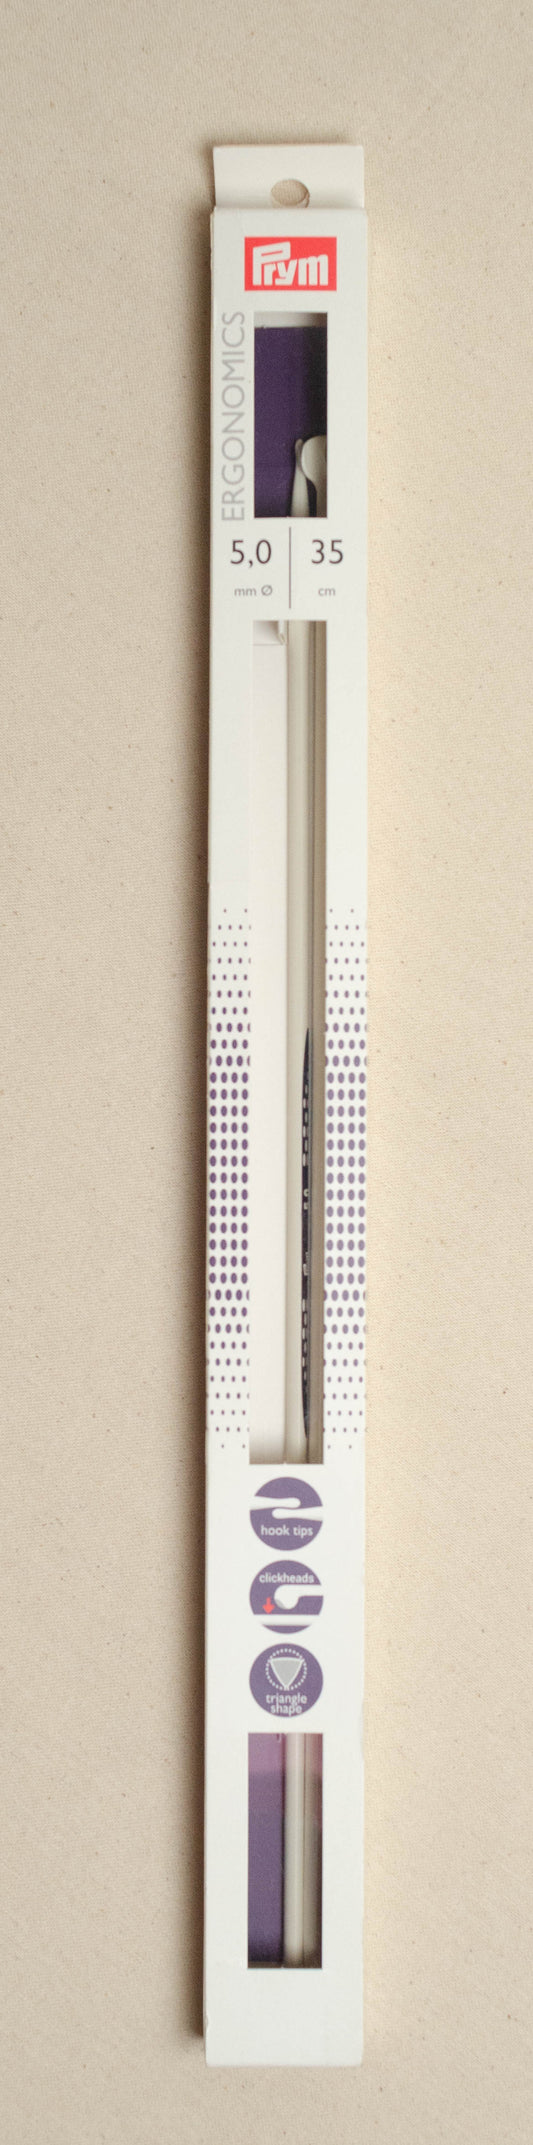 Prym Ergonomics 35cm Knitting Needles - 35cm X 5.0mm